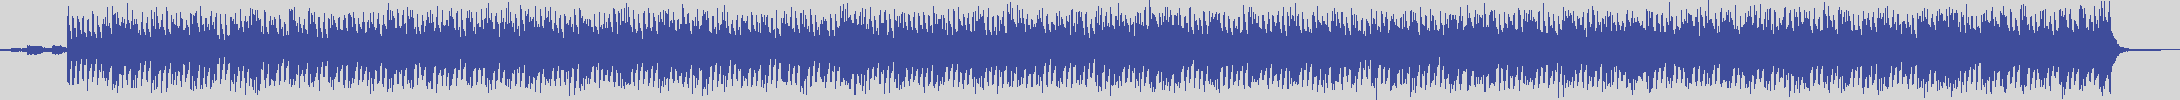 upr [UPR082] Ltno - Godstar [Original Mix] audio wave form